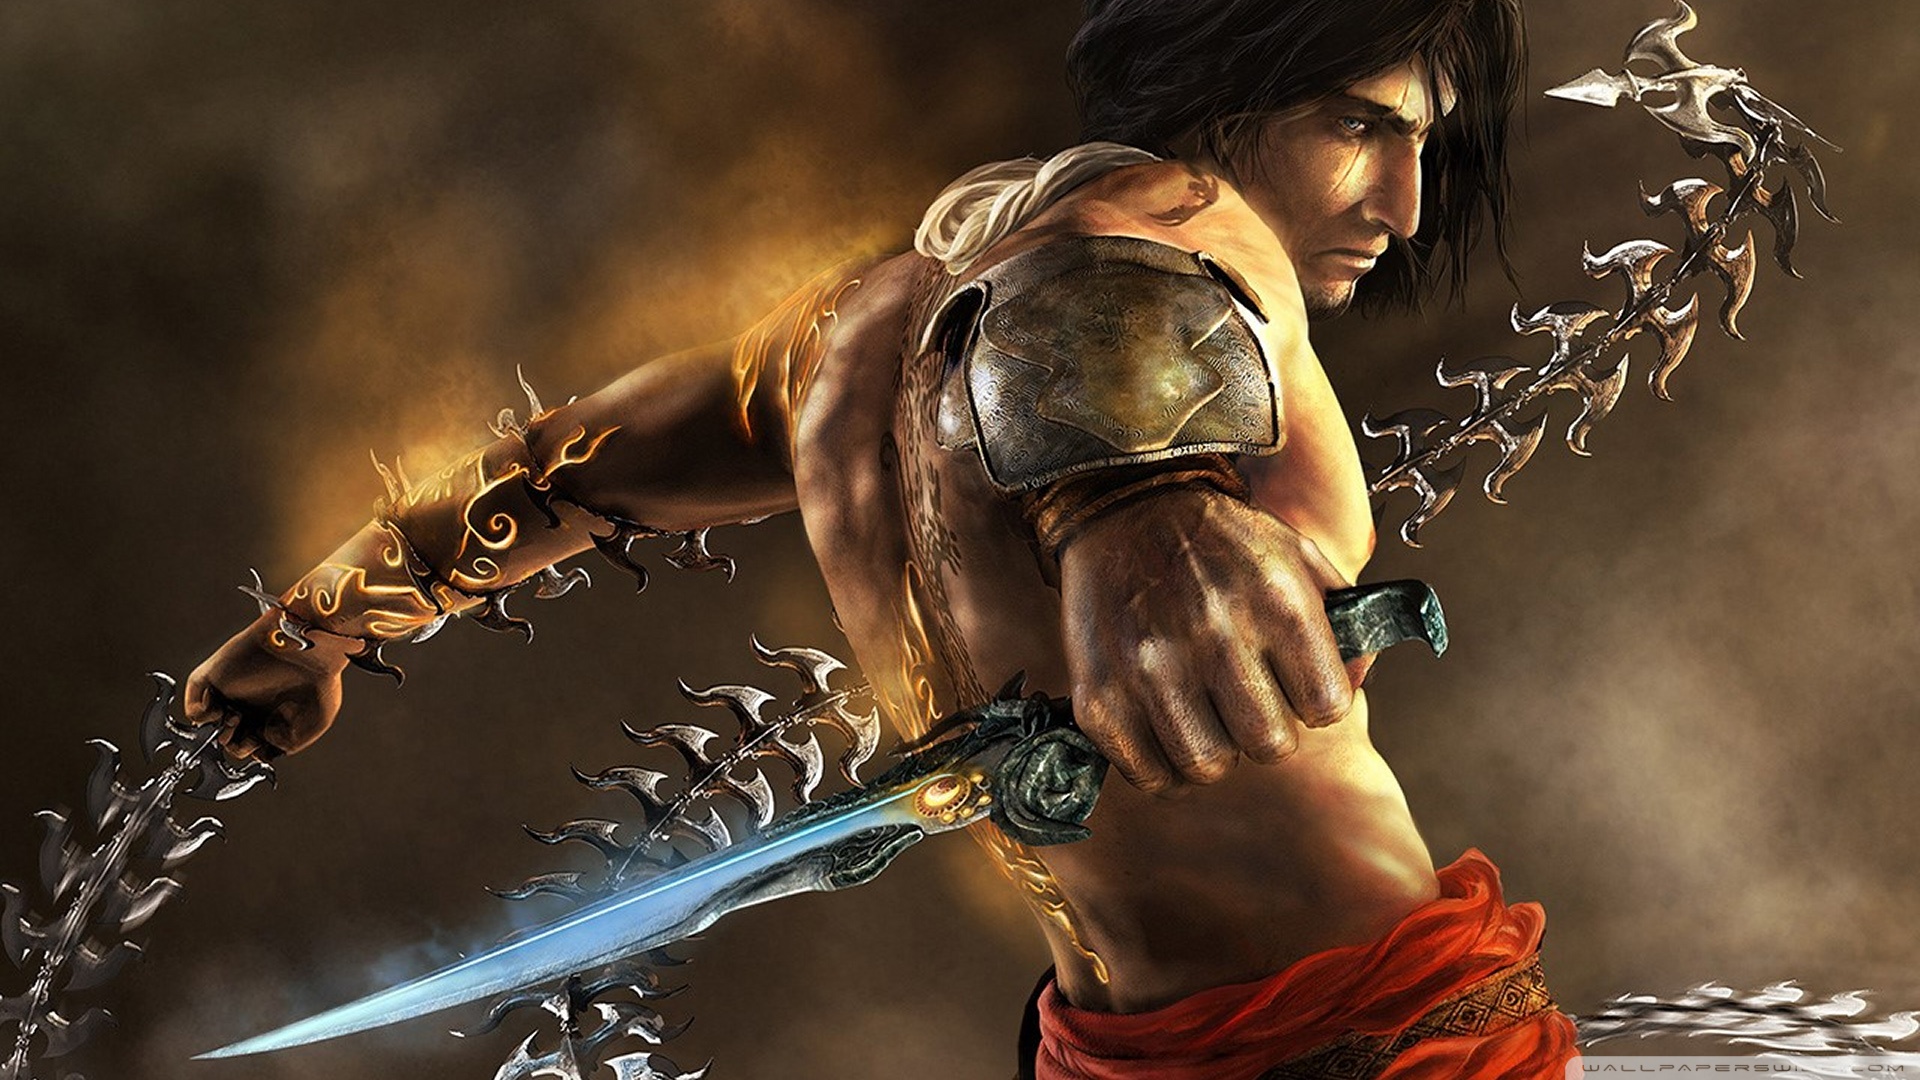 Prince Of Persia The Two Thrones HD desktop wallpaper : Widescreen ...